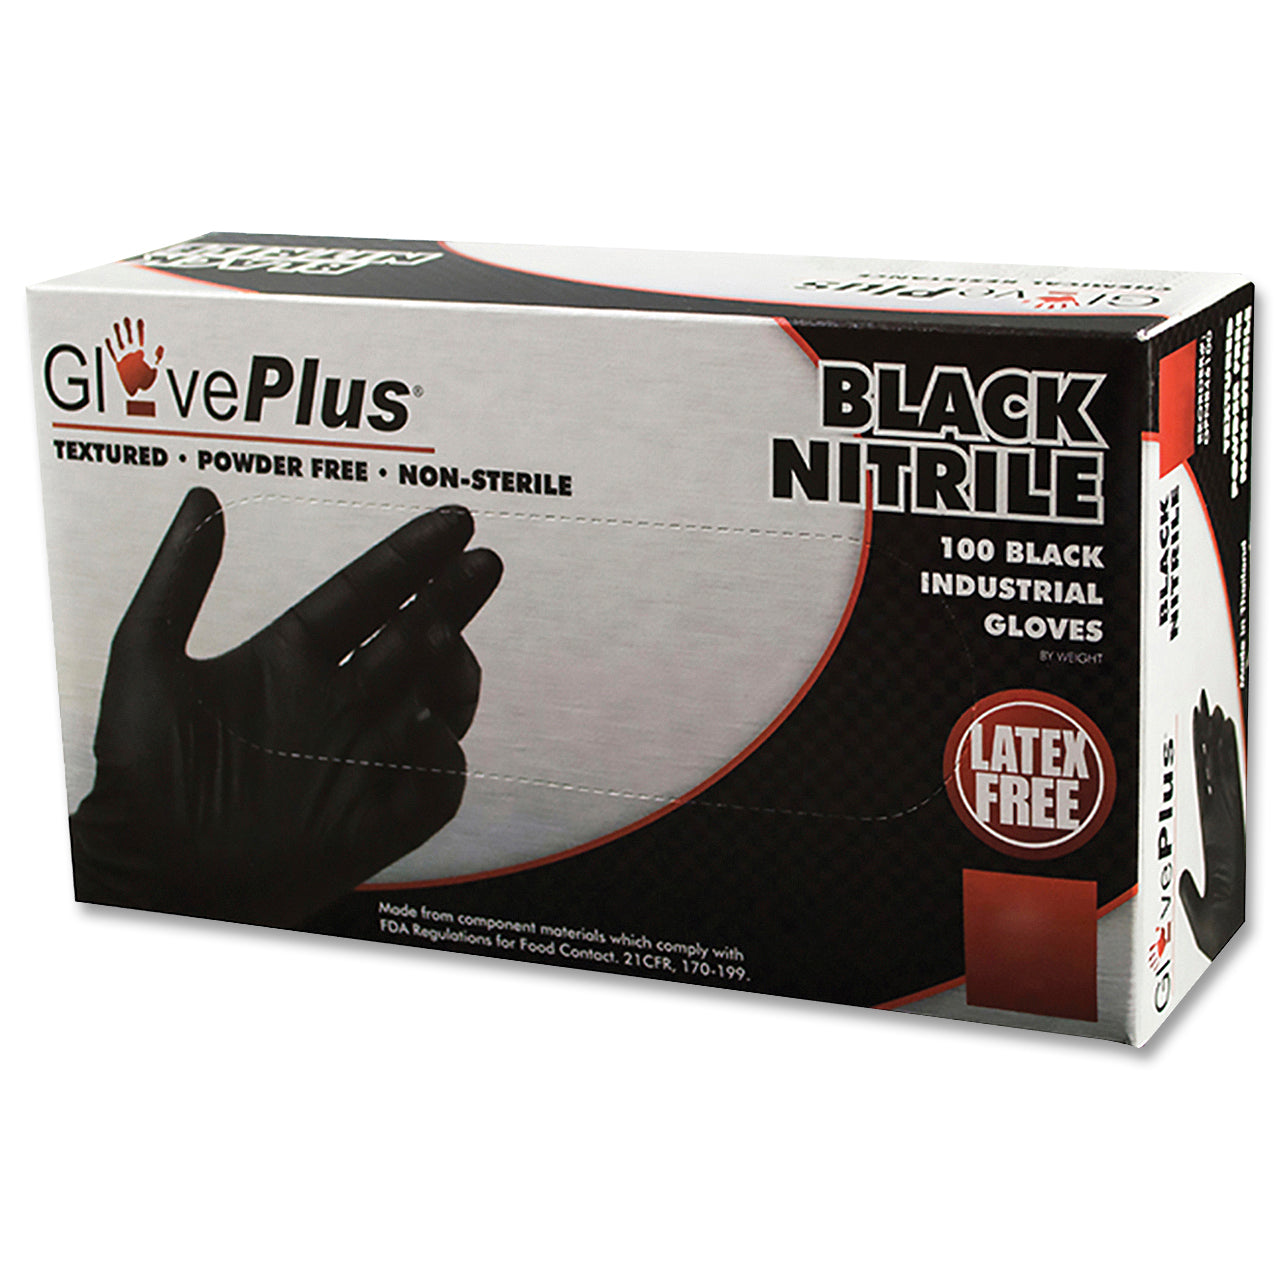 GlovePlus Black Nitrile PF Industrial Gloves